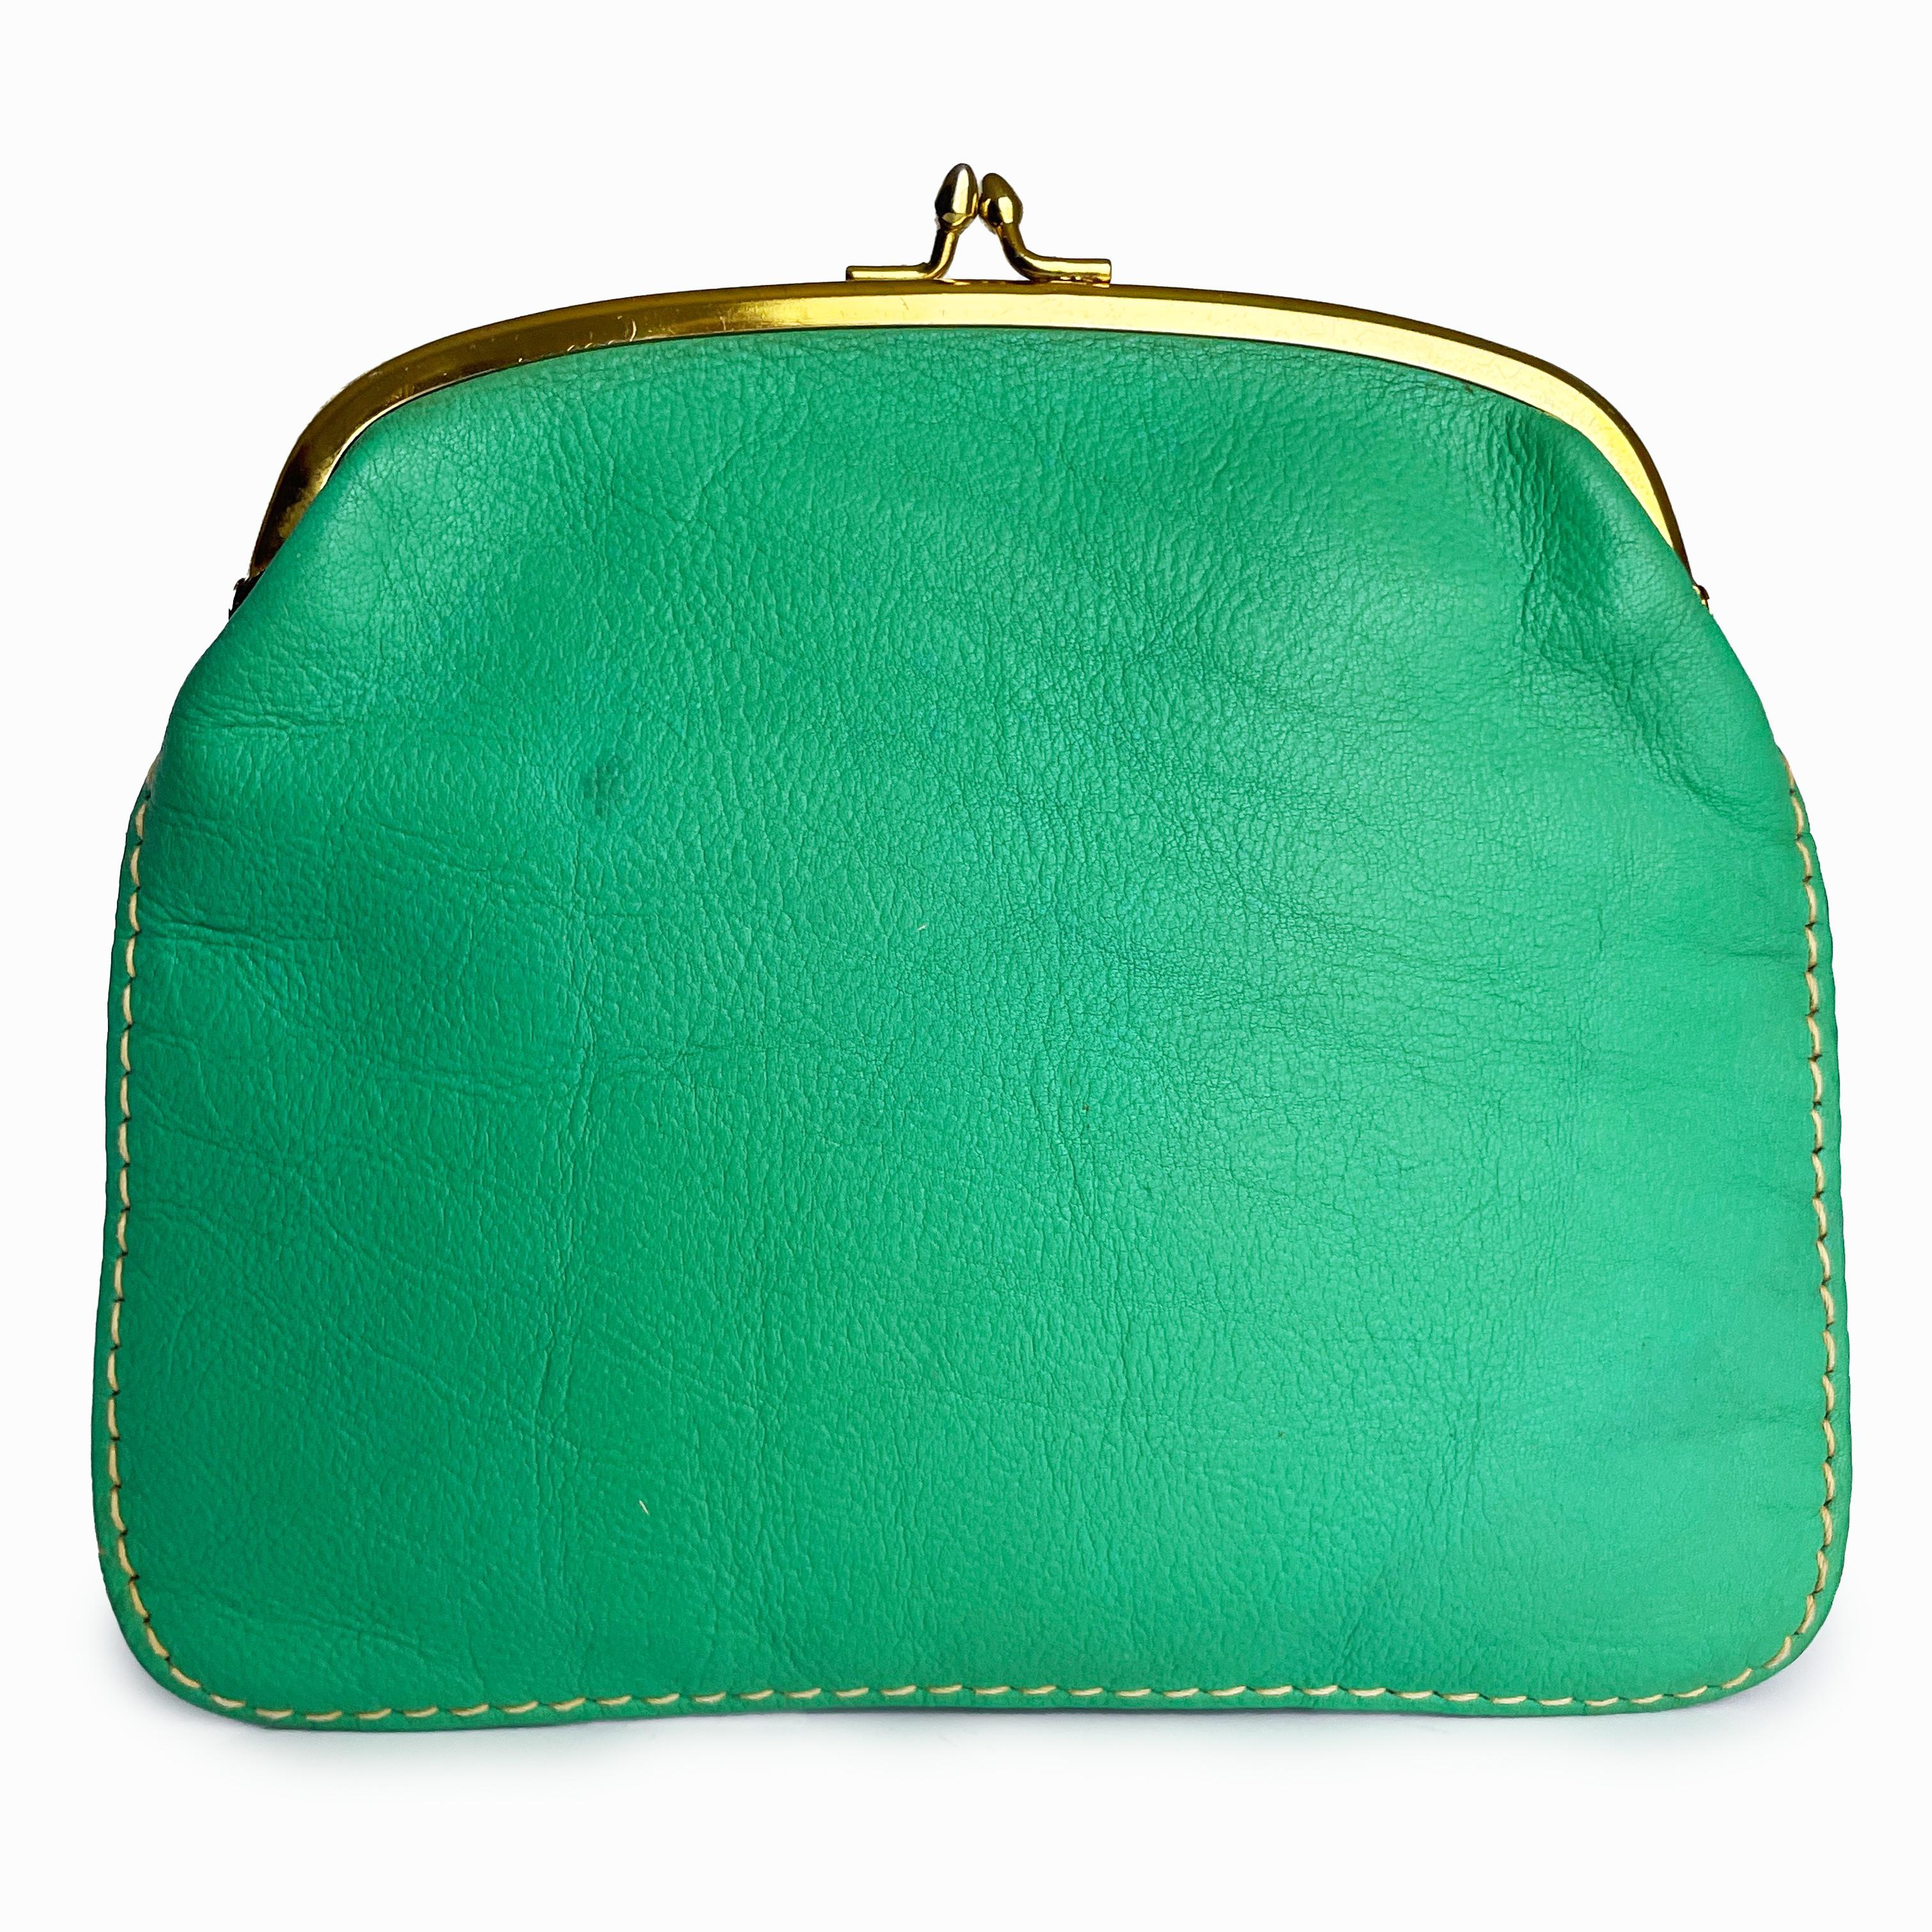 Bonnie Cashin for Coach Foldover Purse 60s Cashin Carry Mint Green Leather Rare For Sale 6